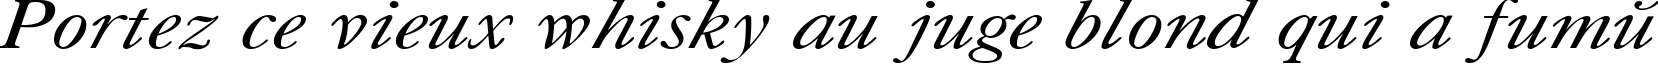 Пример написания шрифтом Caslon Italic:001.001 текста на французском